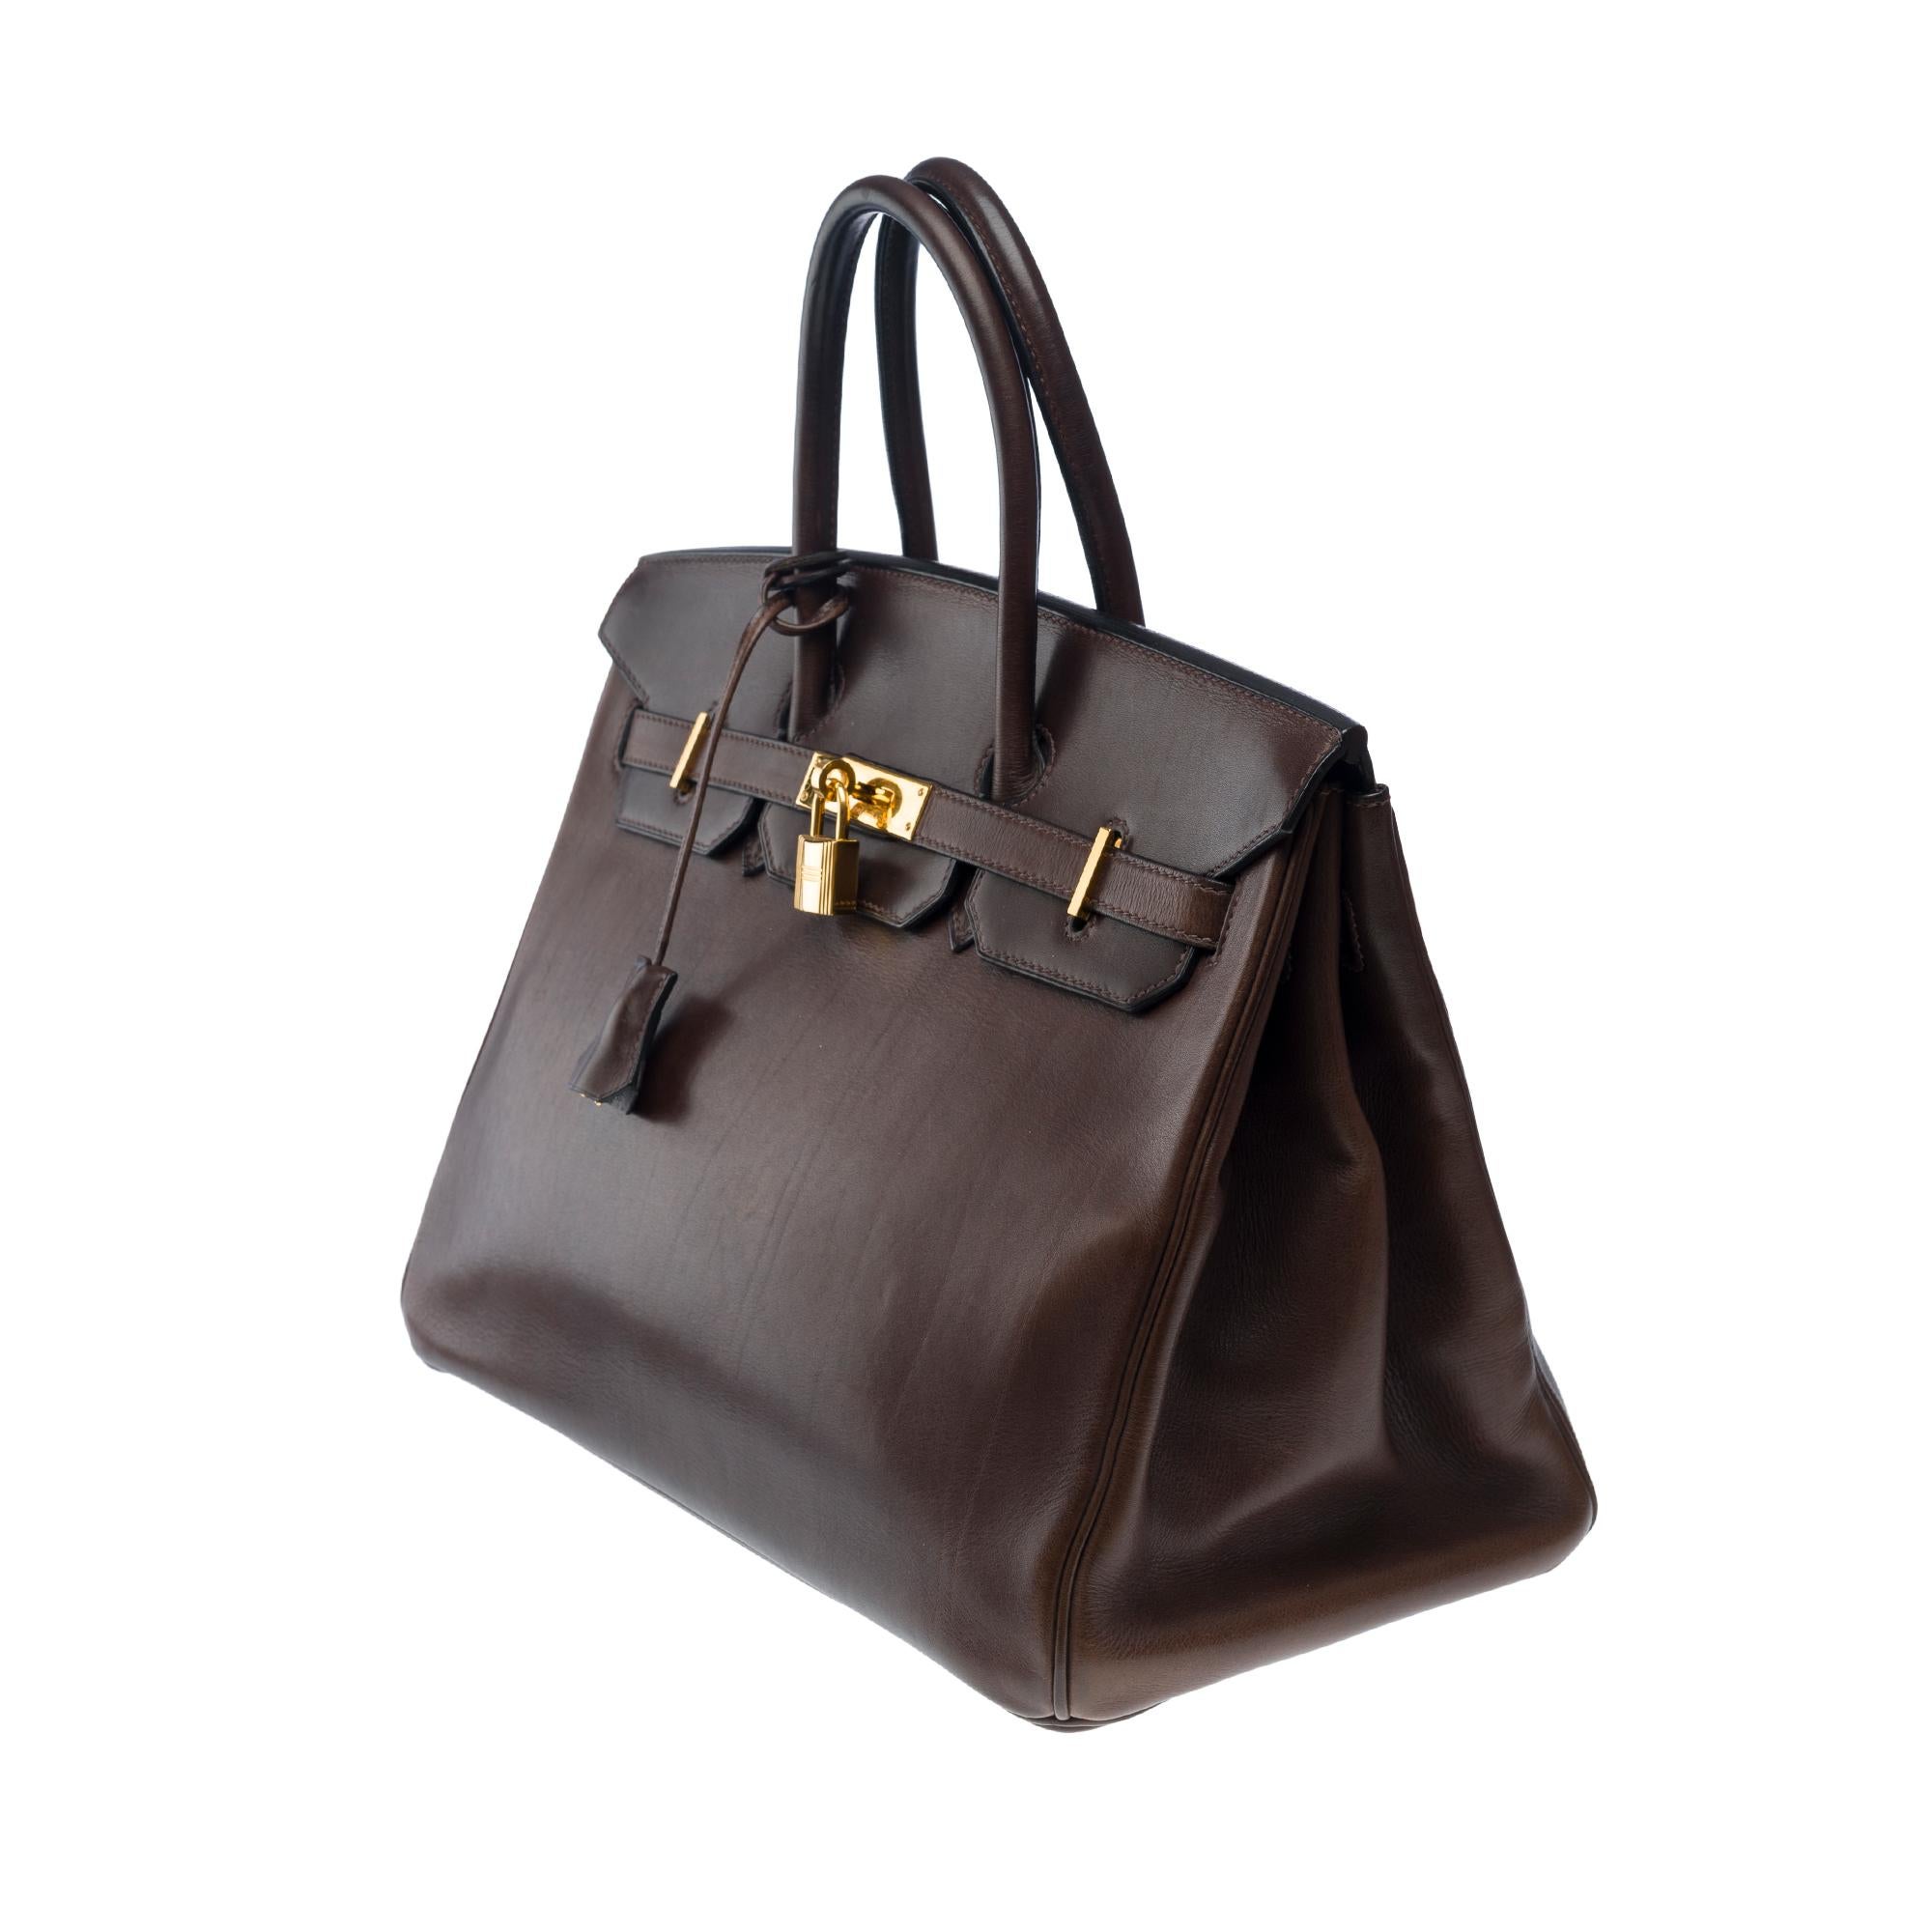 Women's Rare & Exceptional Hermès Birkin 35 handbag in Ebony Brown Barenia leather, GHW For Sale